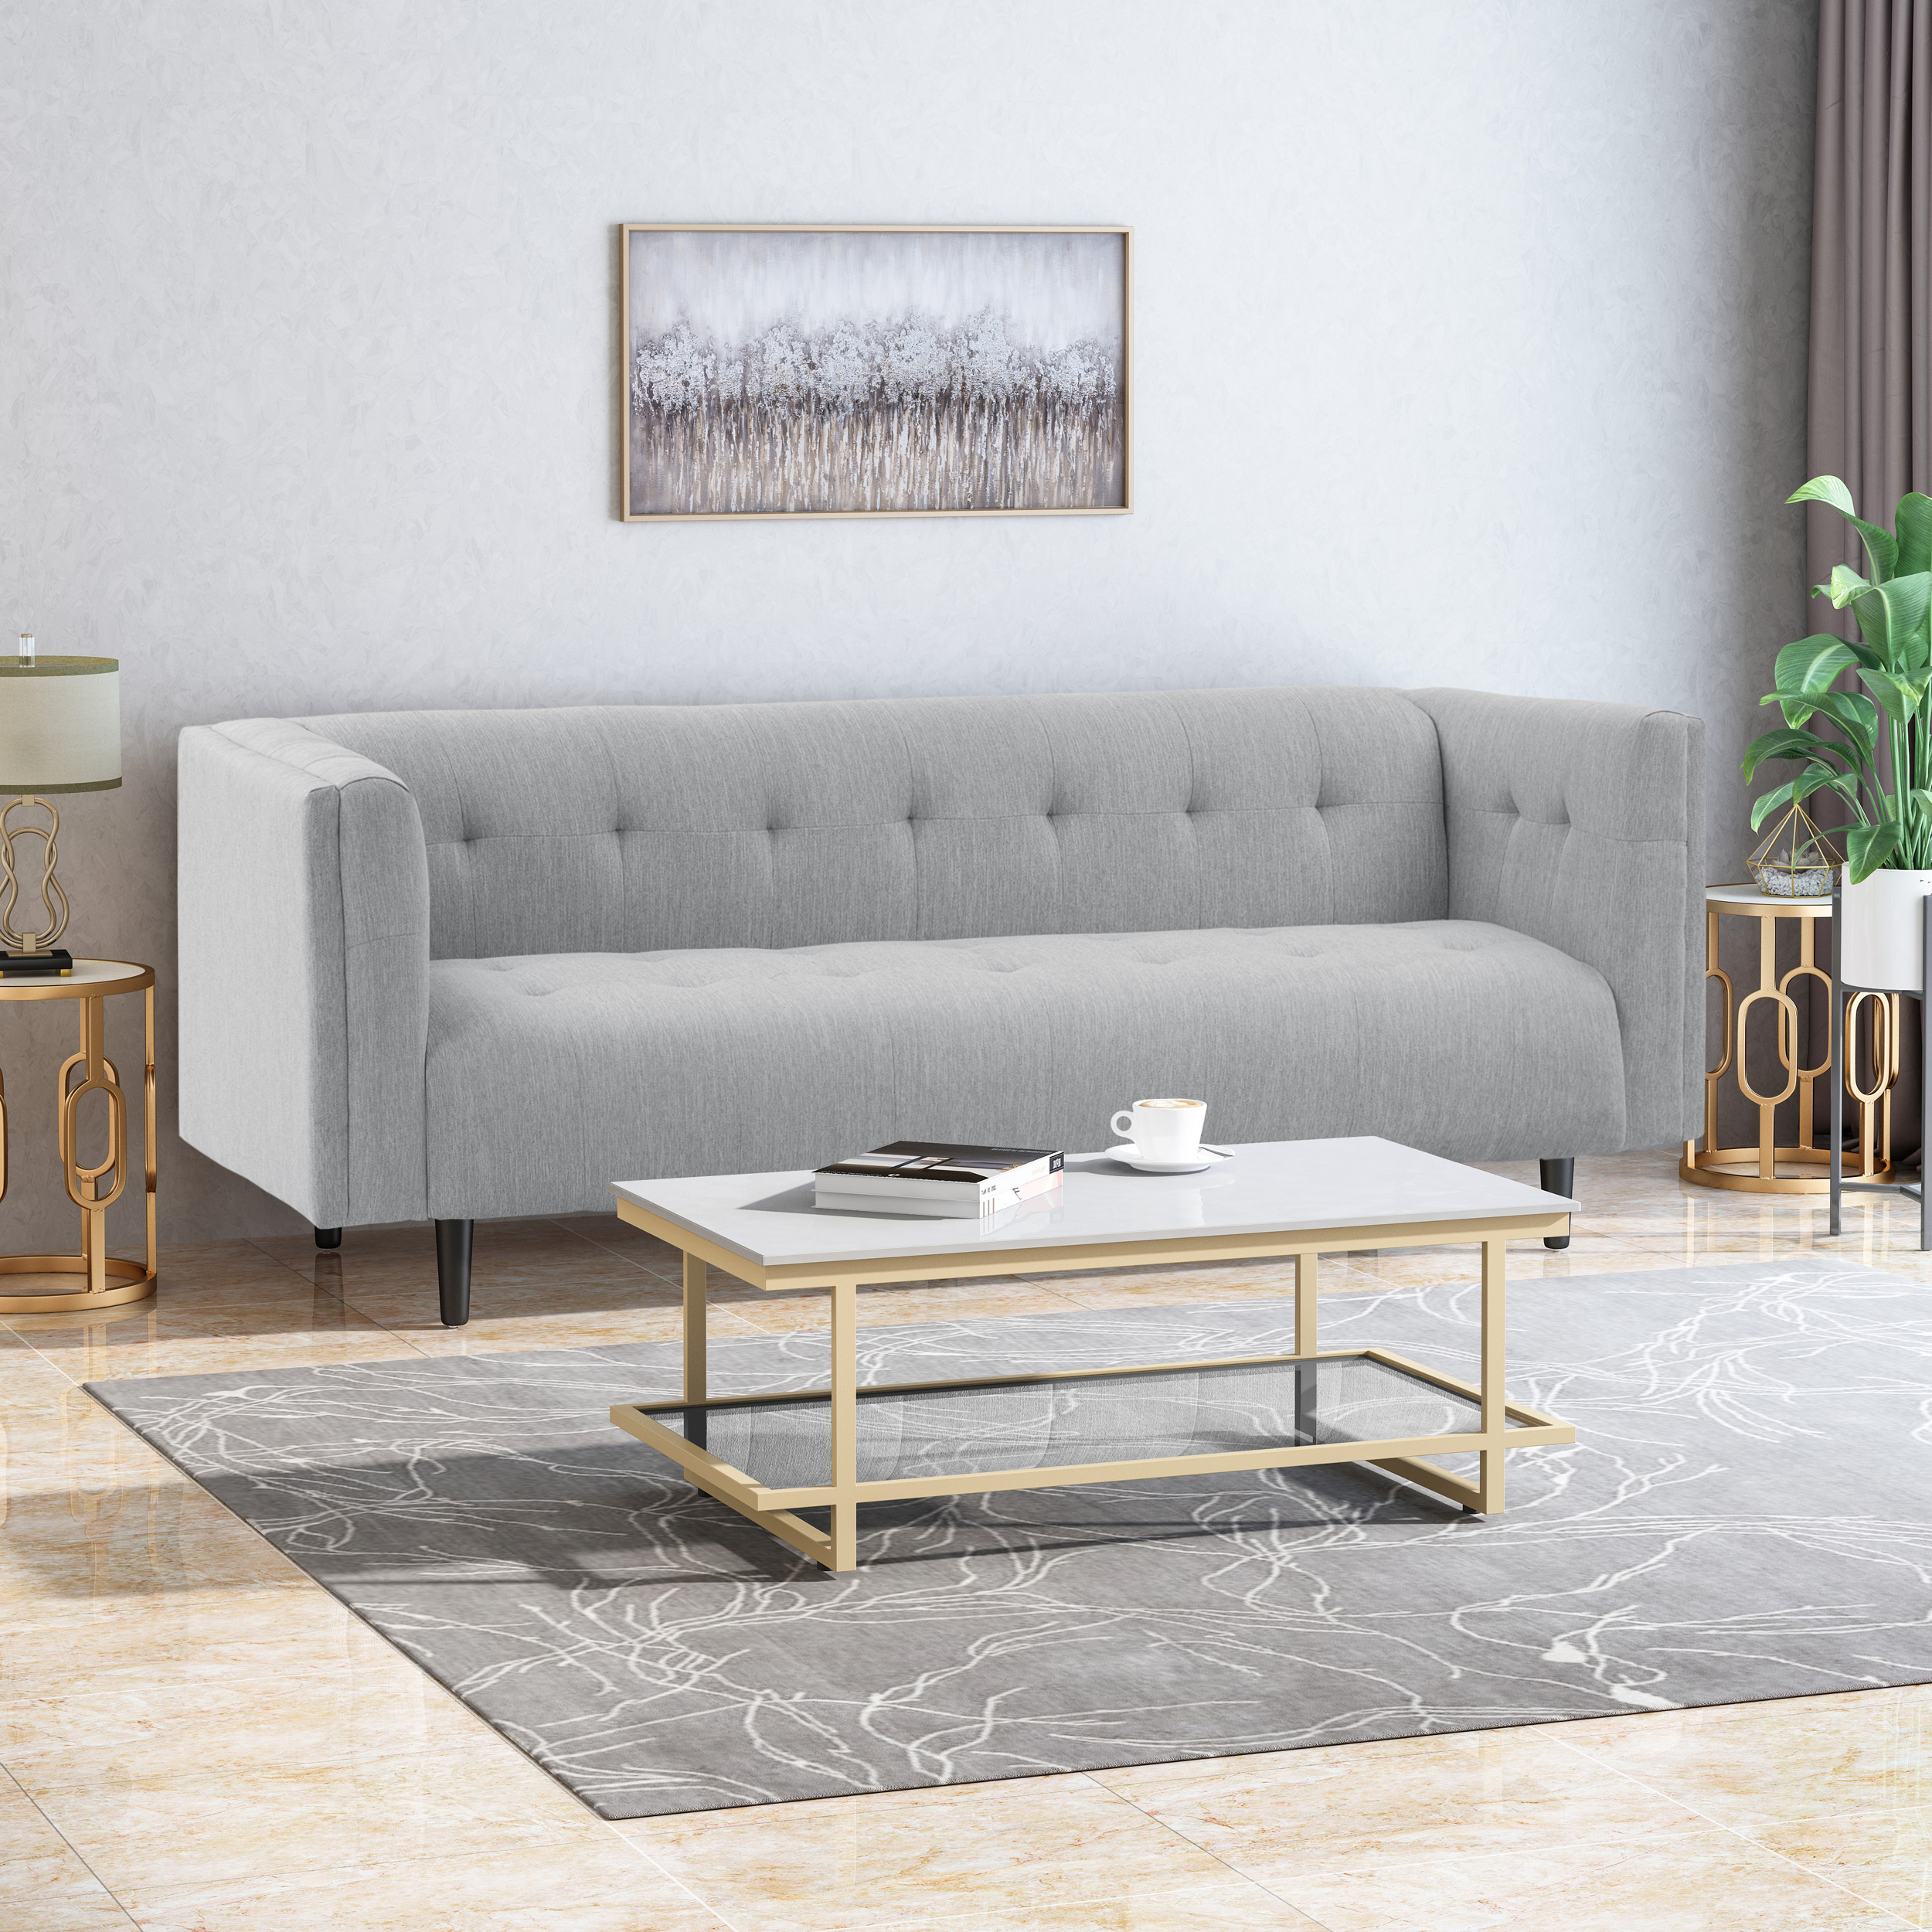 Lagom Fabric Upholstered Sofa, Light Gray, Dark Brown - image 1 of 9